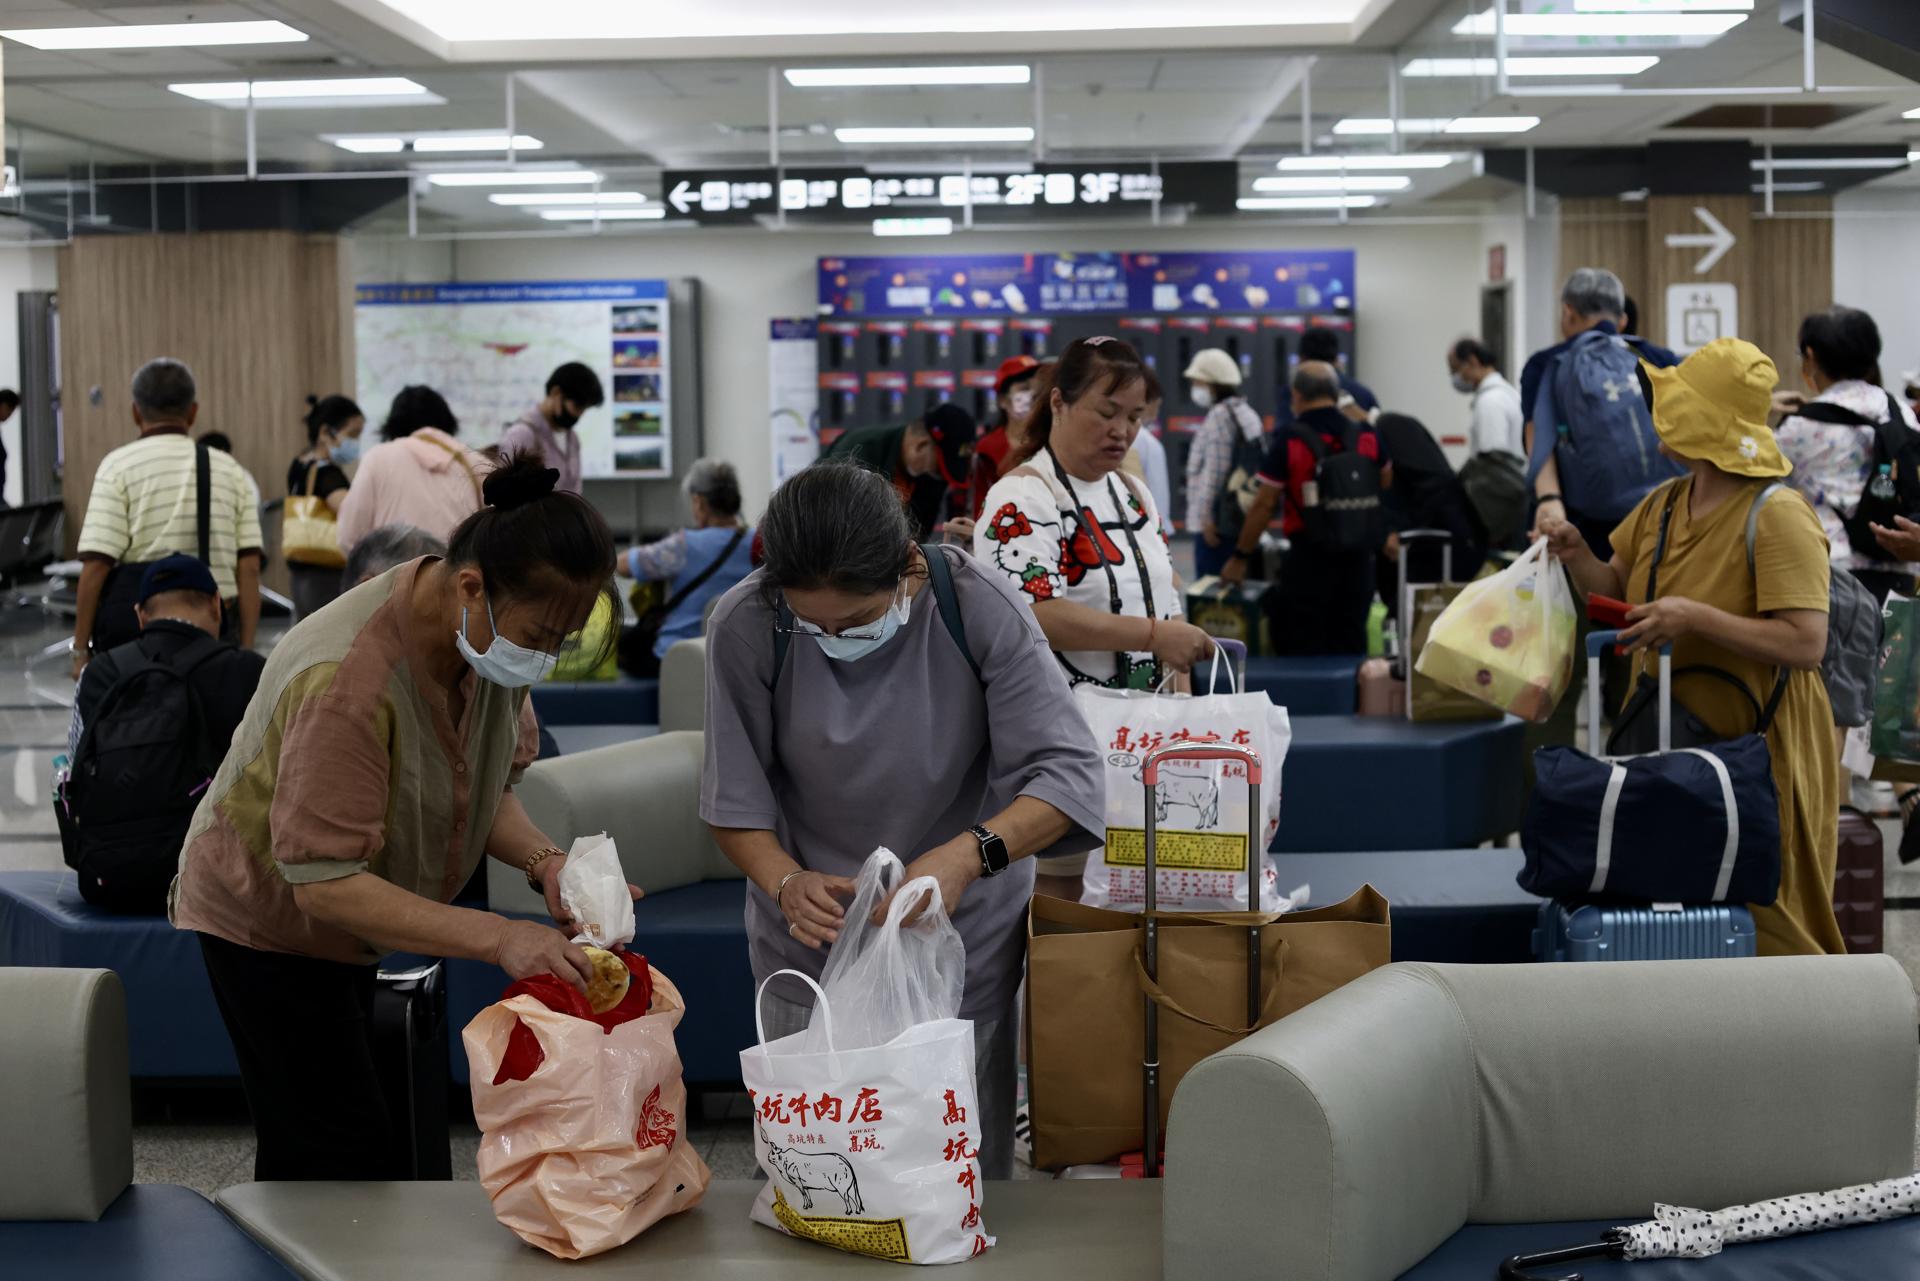 Affected passengers react as Typhoon Koinu moved closer toward southern Taiwan, inside the Songshan airport in Taipei, Taiwan, 04 October 2023. EFE/EPA/RITCHIE B. TONGO